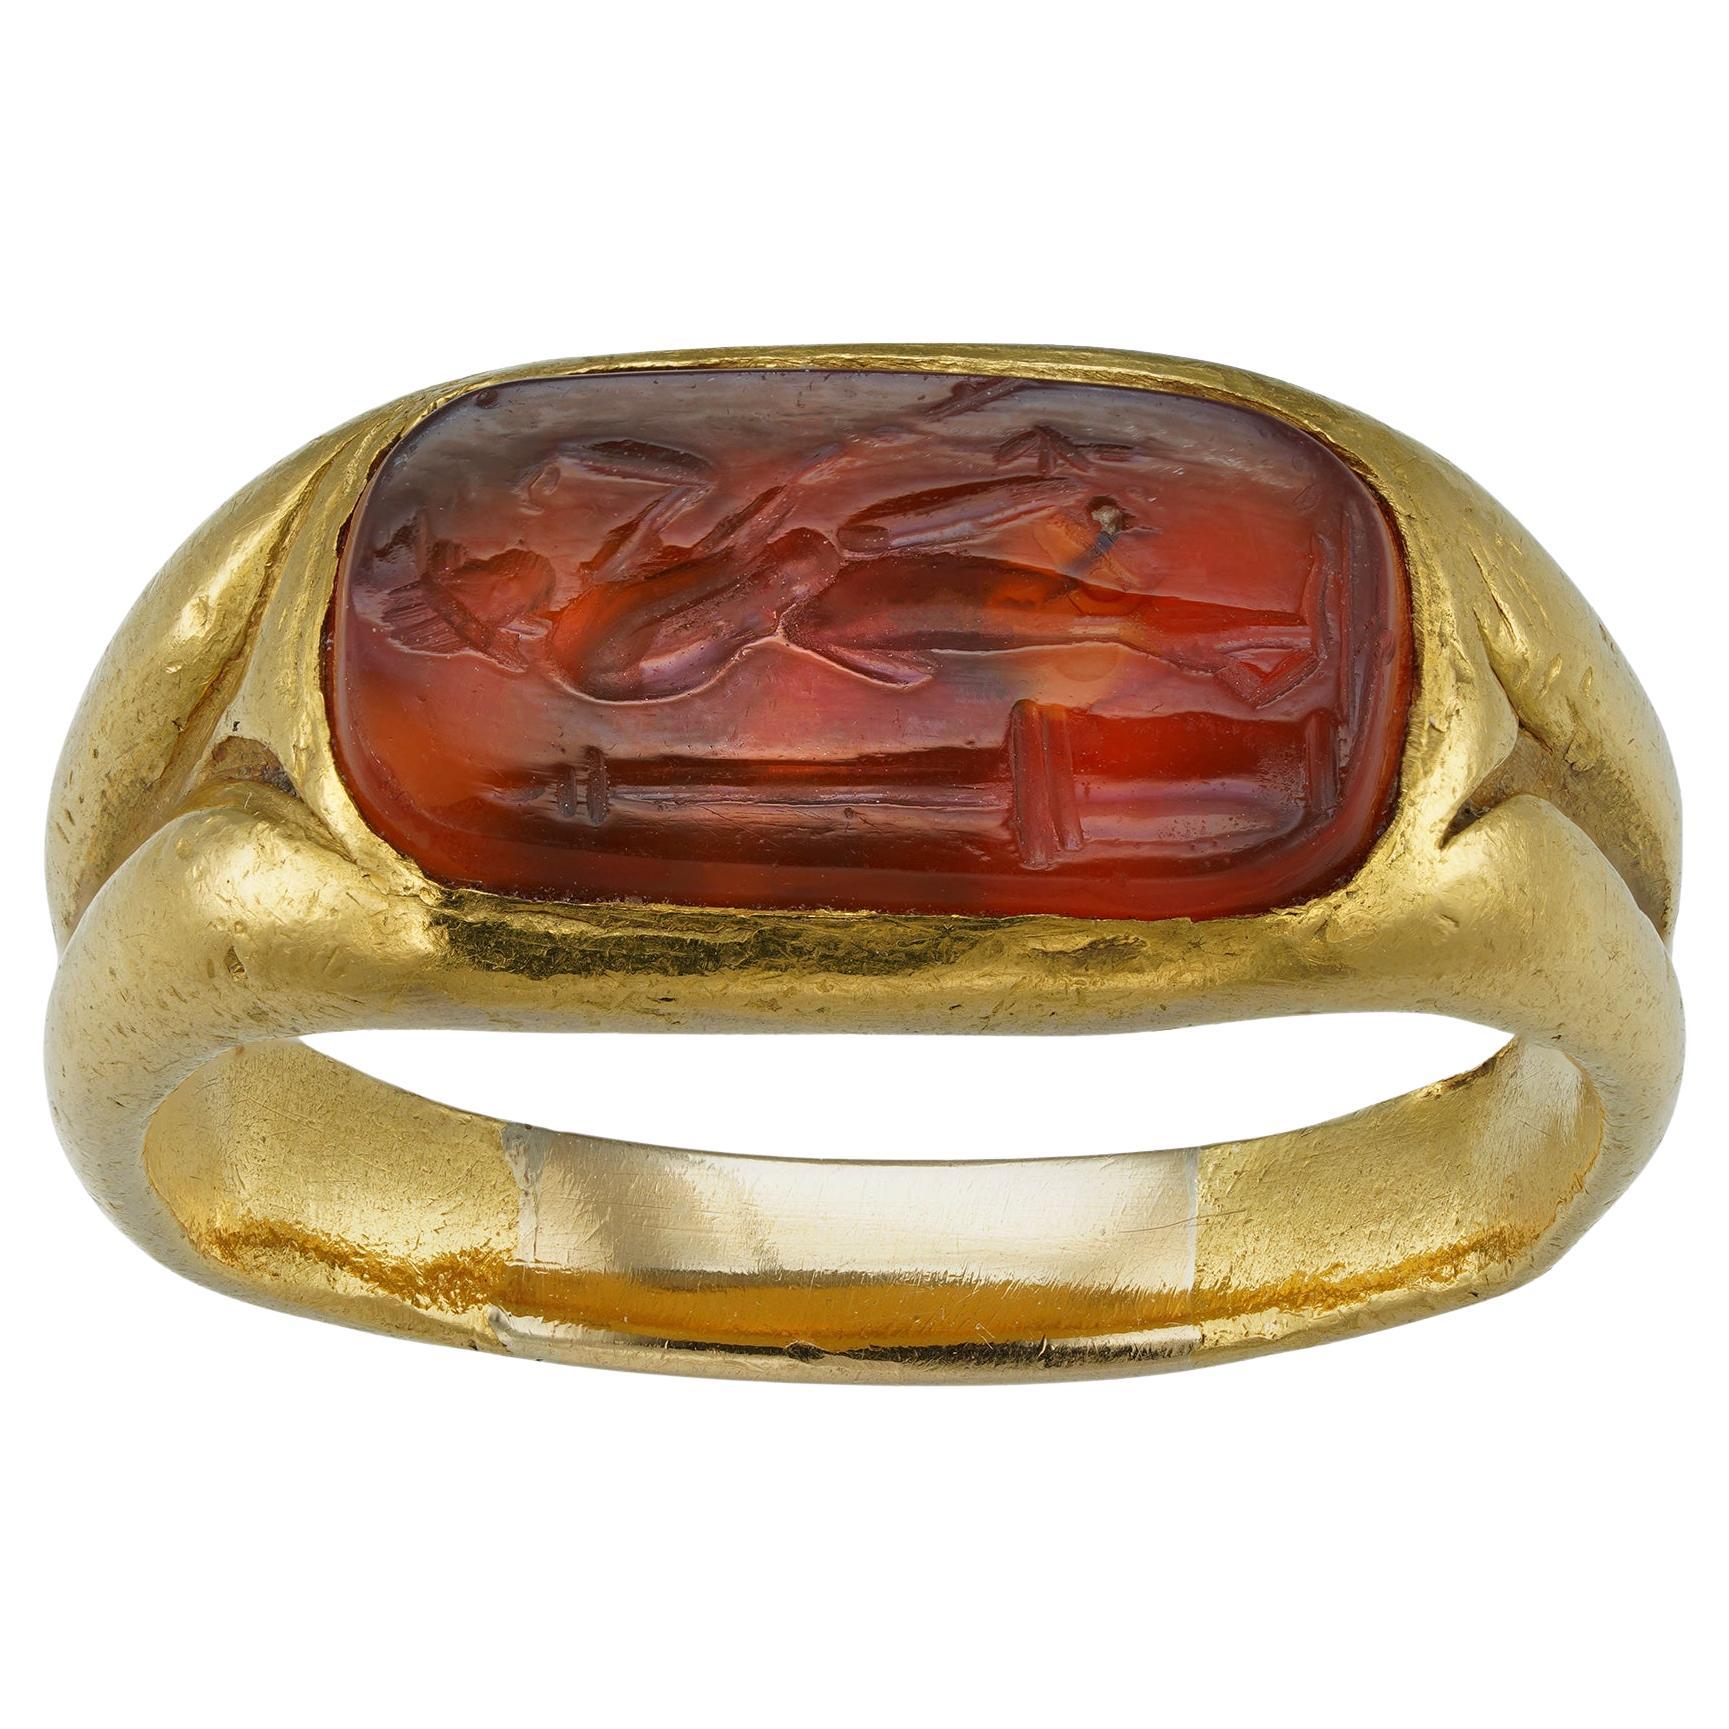 A Roman carnelian intaglio gold ring